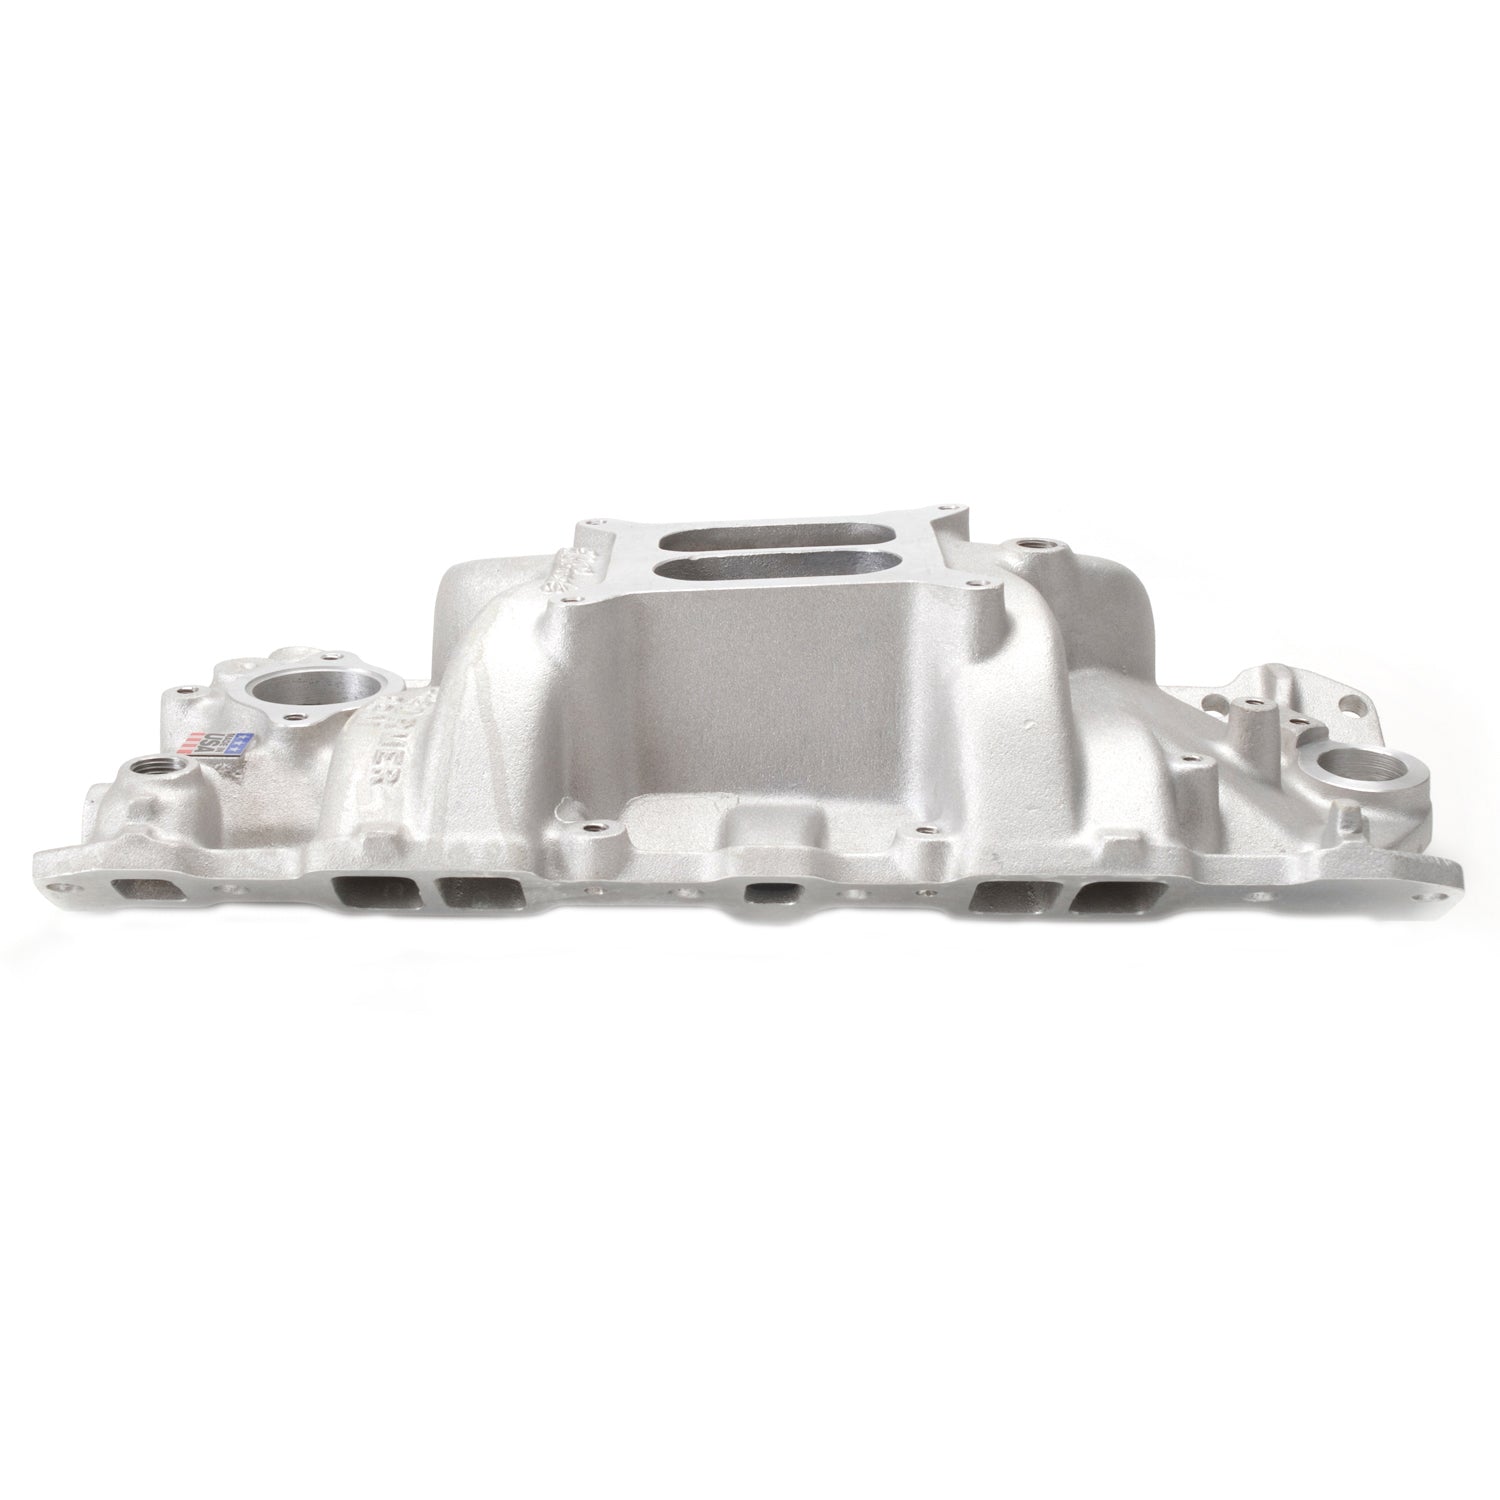 Edelbrock Performer RPM Intake Manifold For Chevrolet 262-400 Small-Block V8